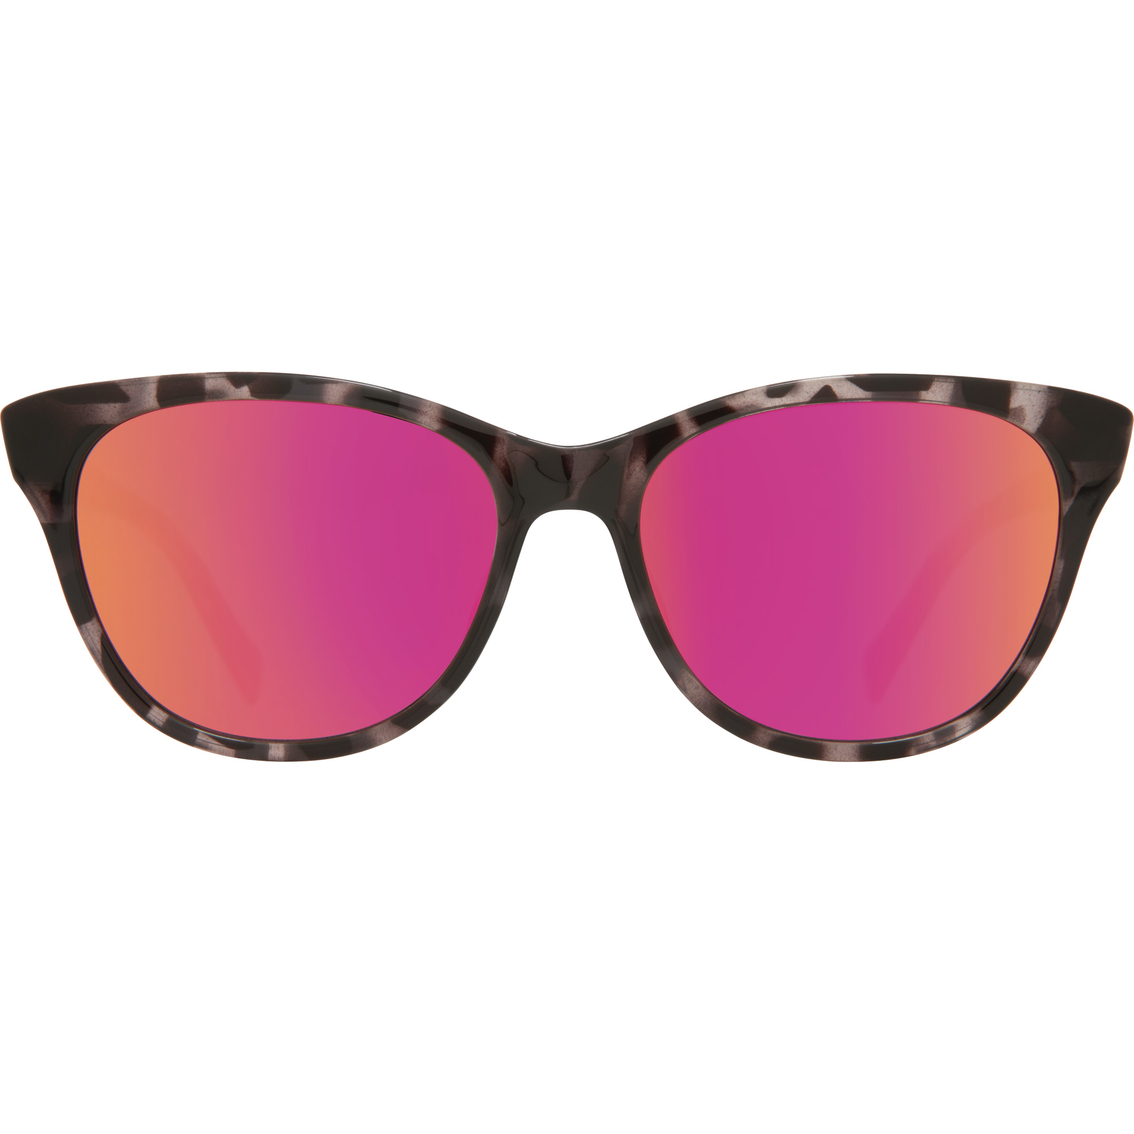 Spy Optic Spritzer Sunglasses - Image 2 of 3